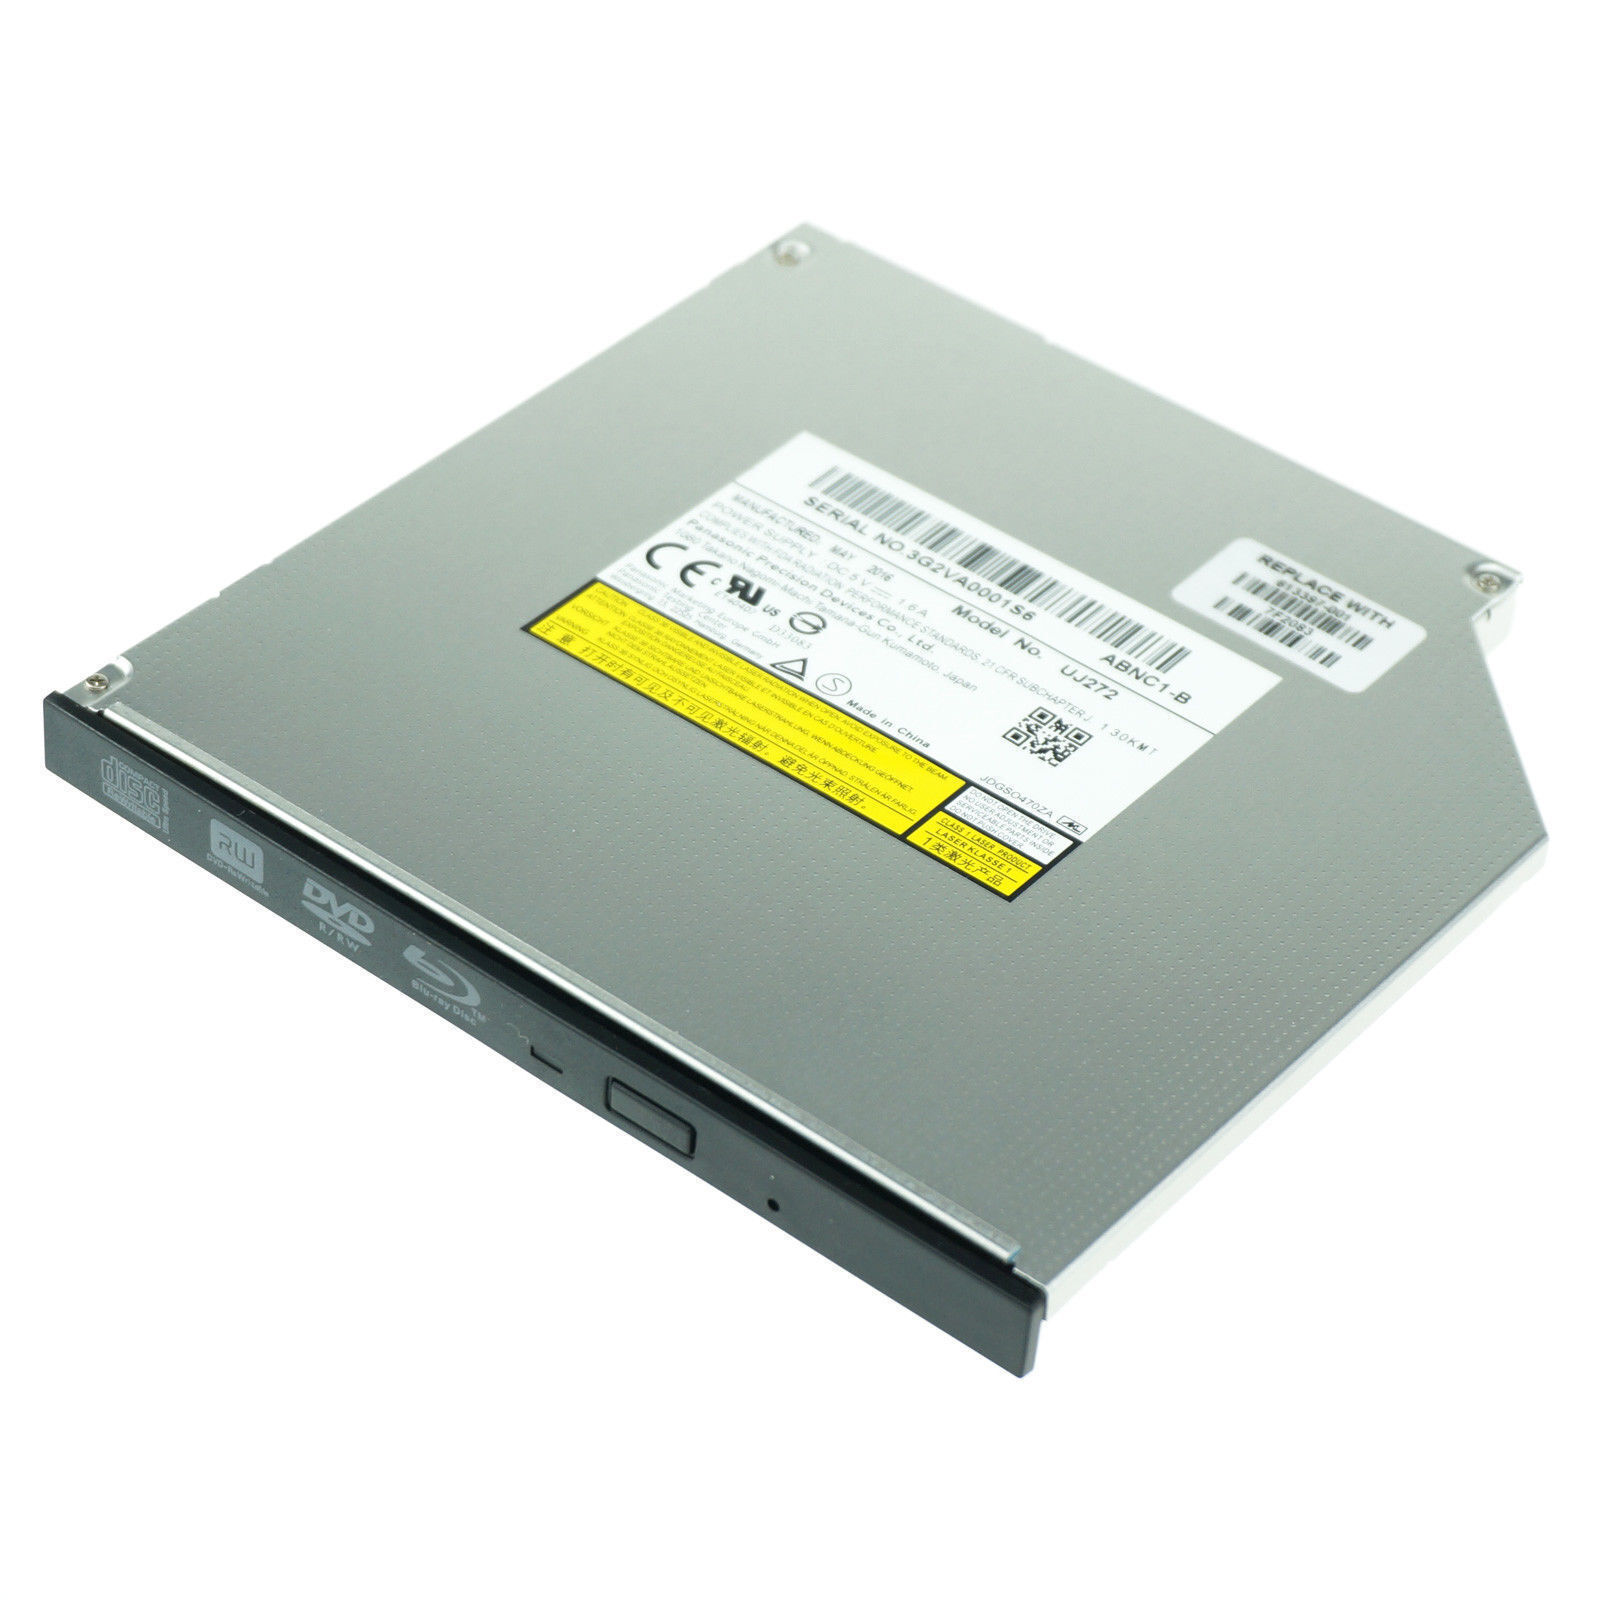 Internal 9.5mm SATA Bluray Burner BD-RW DVD CD Writer Laptop Slim Drive Player